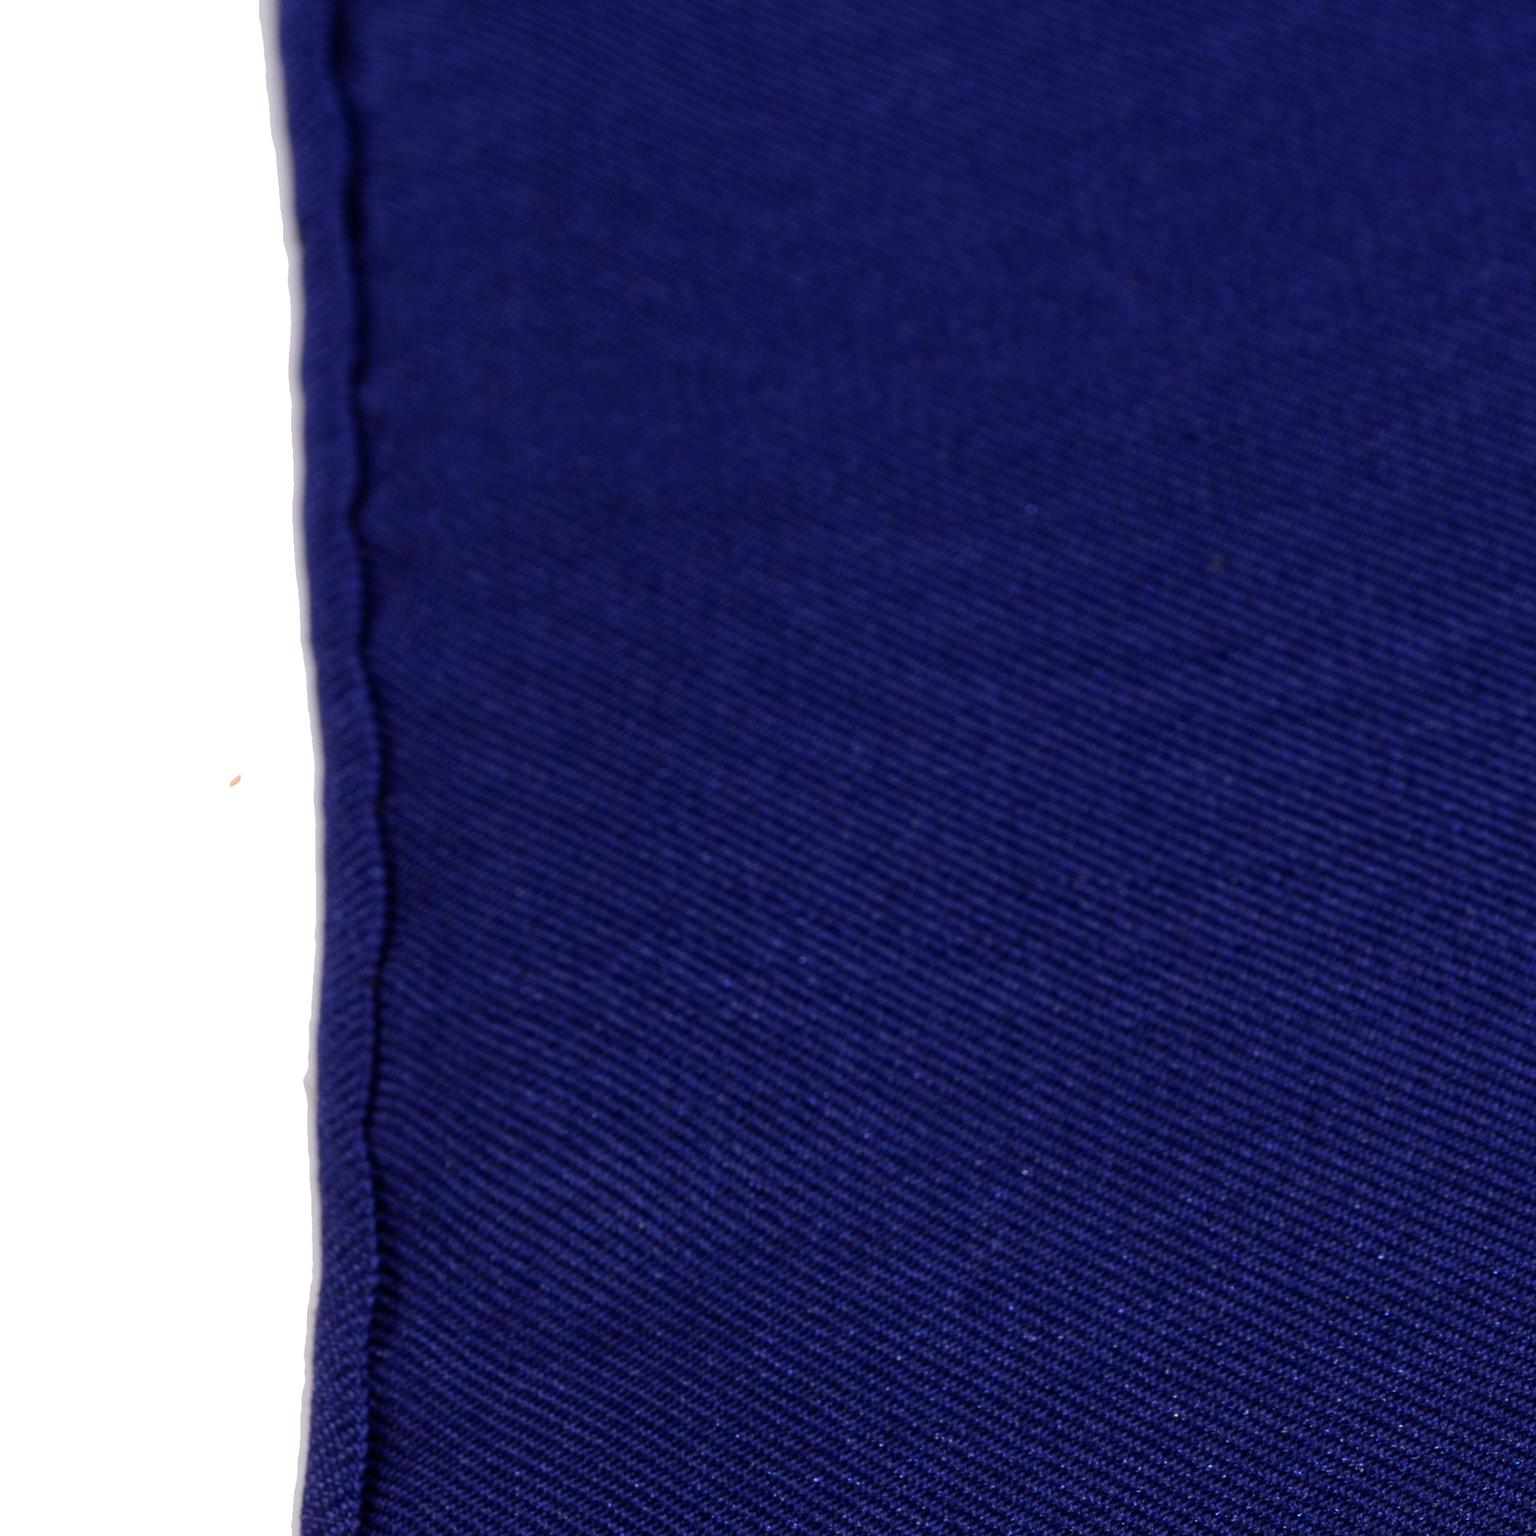 YSL Yves Saint Laurent Vintage Silk Scarf in Bold Colorful Blue & Orange Print 1